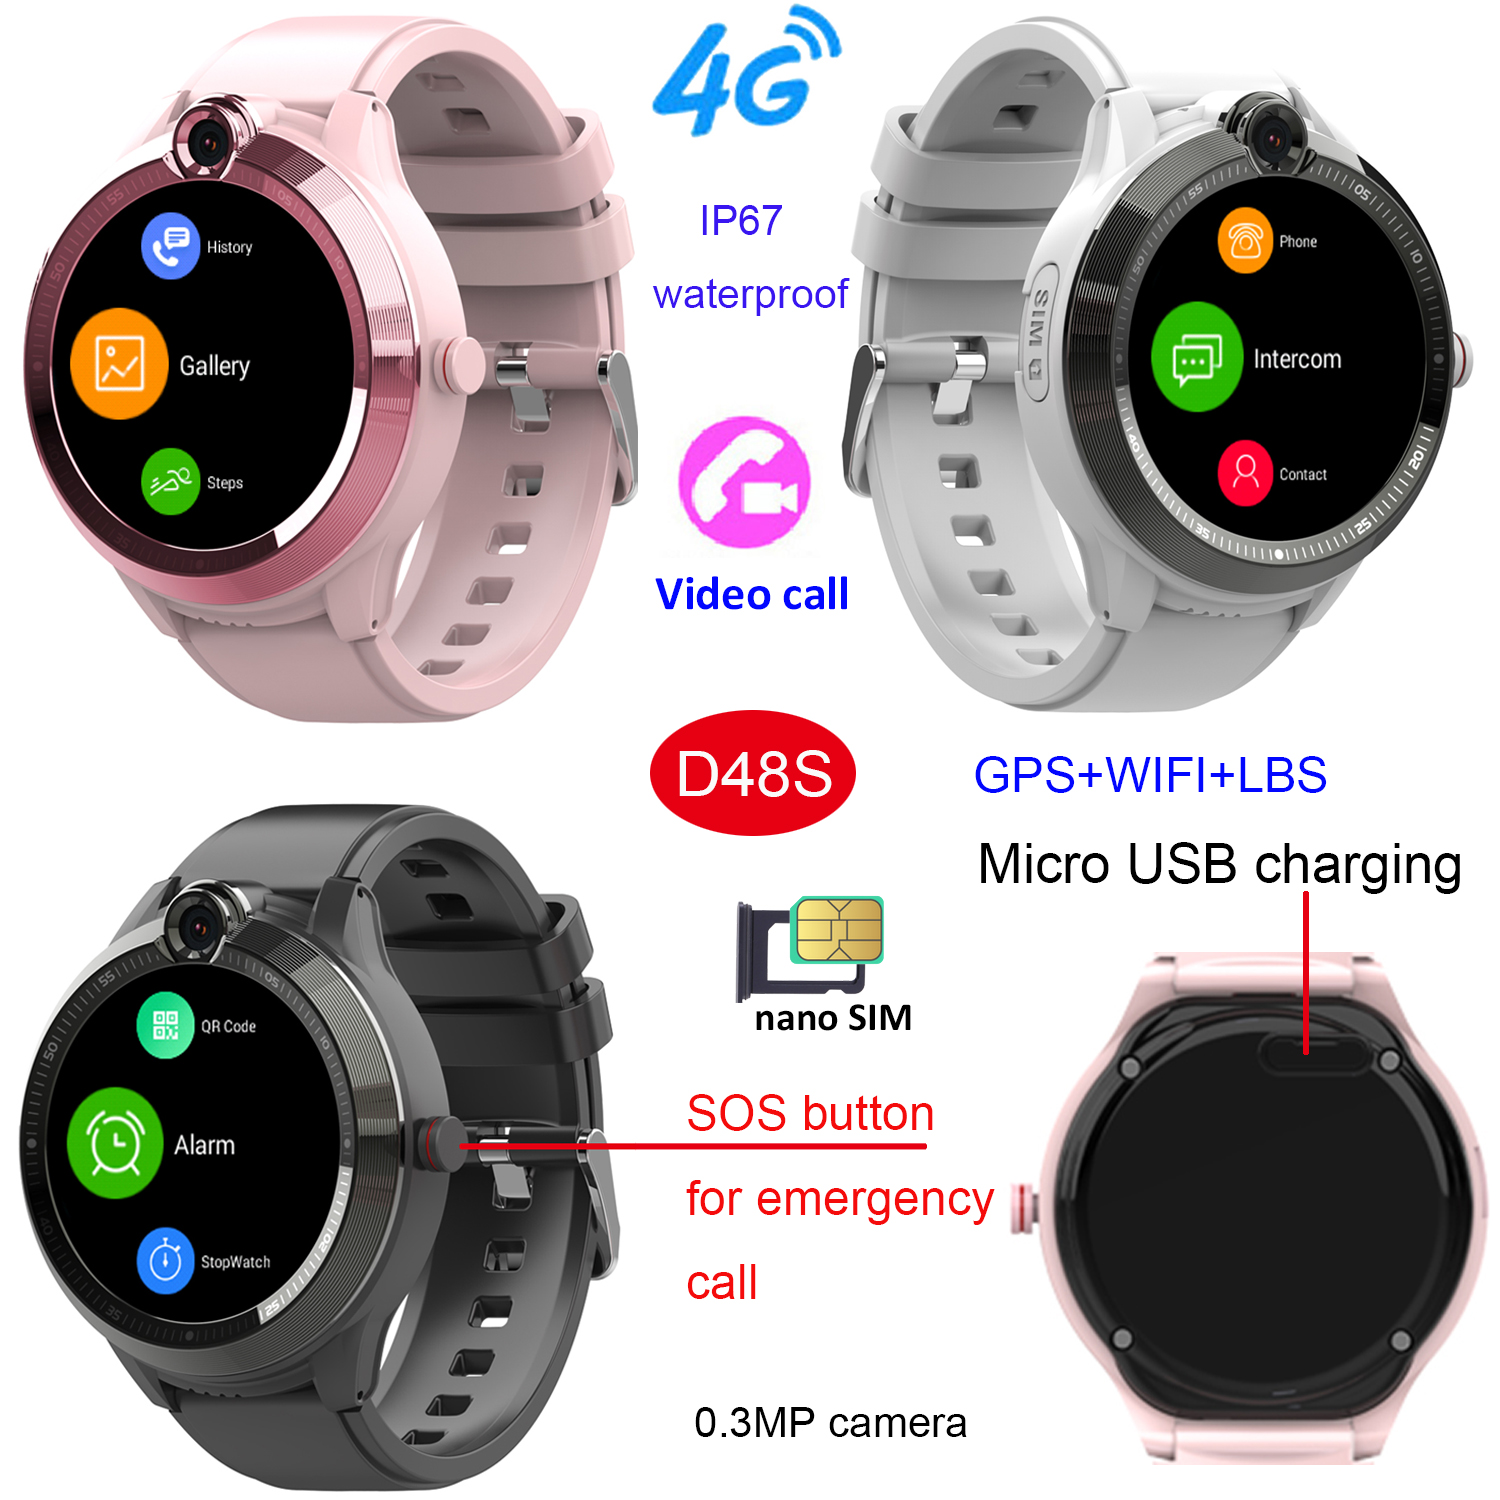 4G IP67 waterproof OEM child GPS Smart Watch D48S